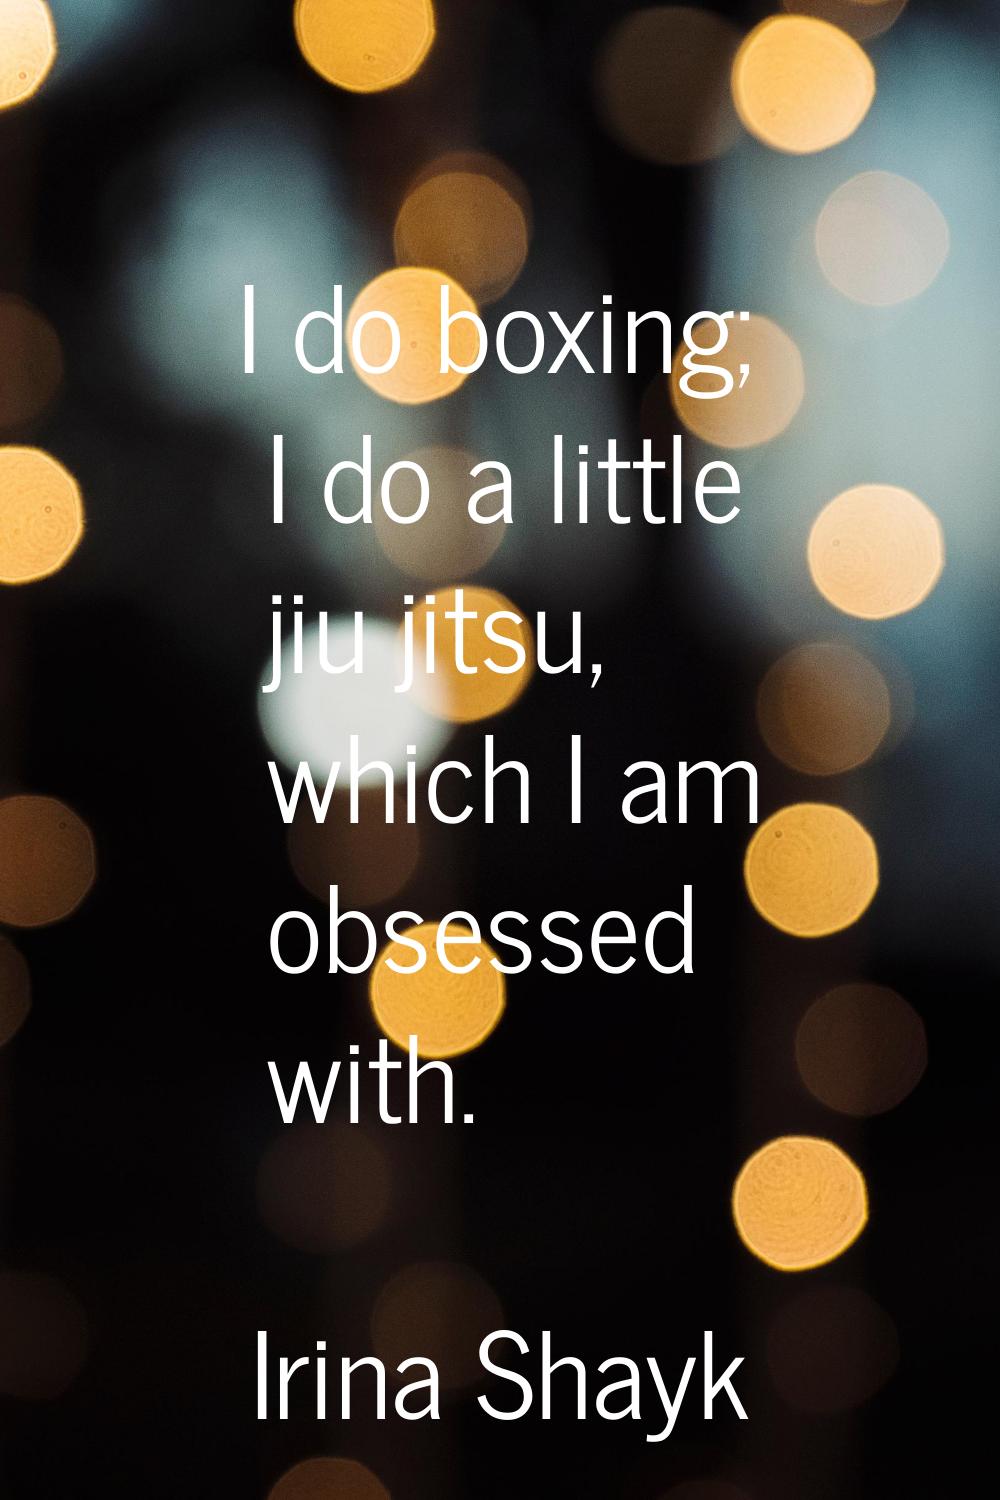 I do boxing; I do a little jiu jitsu, which I am obsessed with.